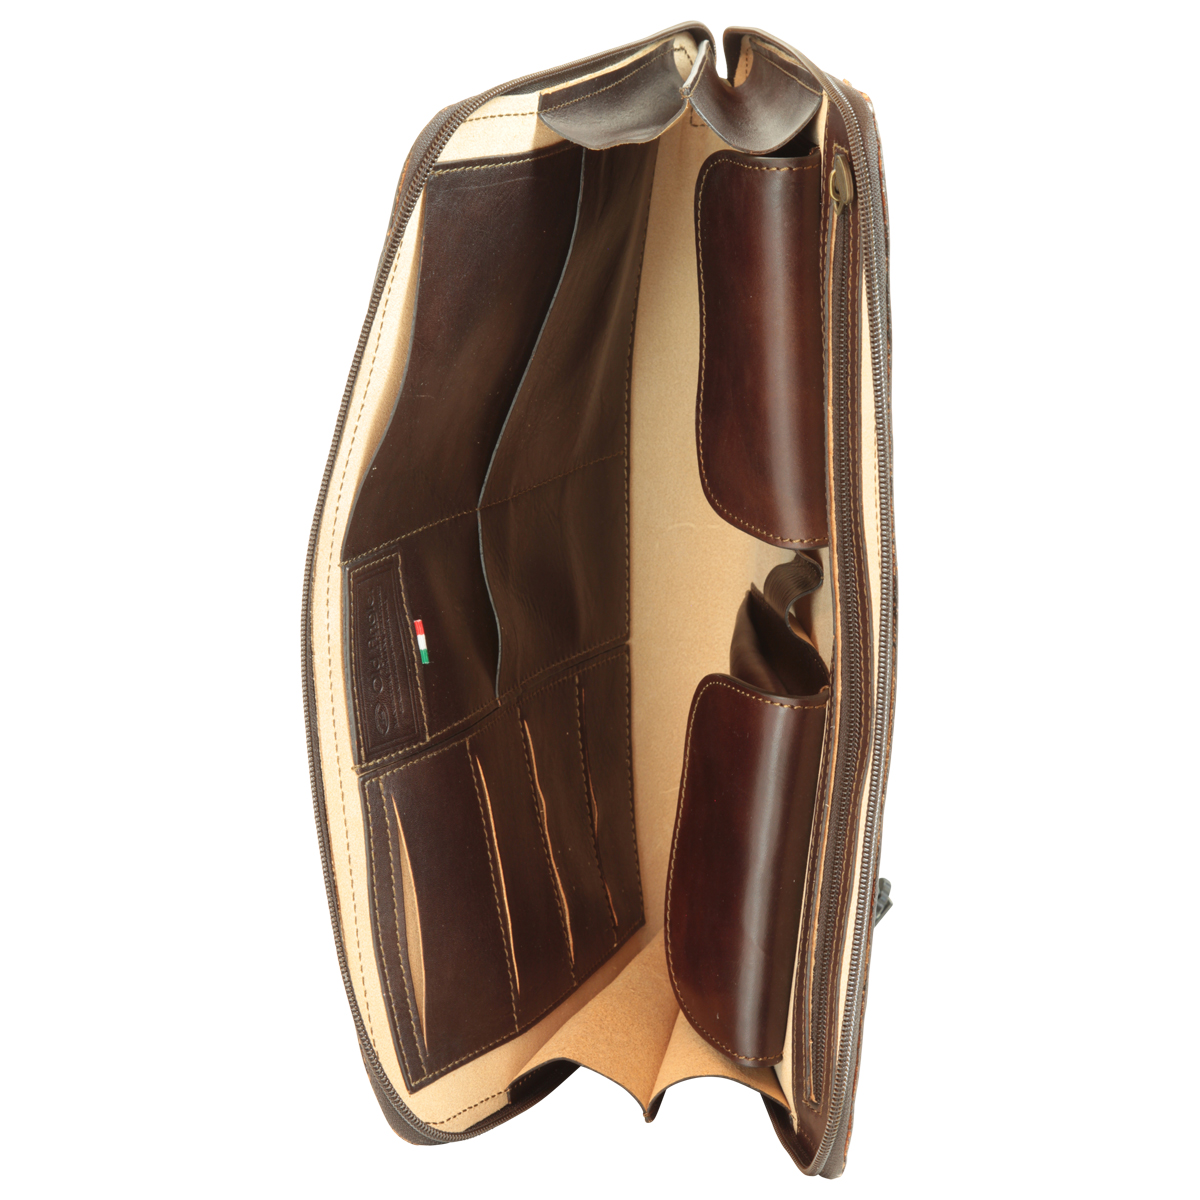 Leather Folder - Dark Brown | 056889TM UK | Old Angler Firenze